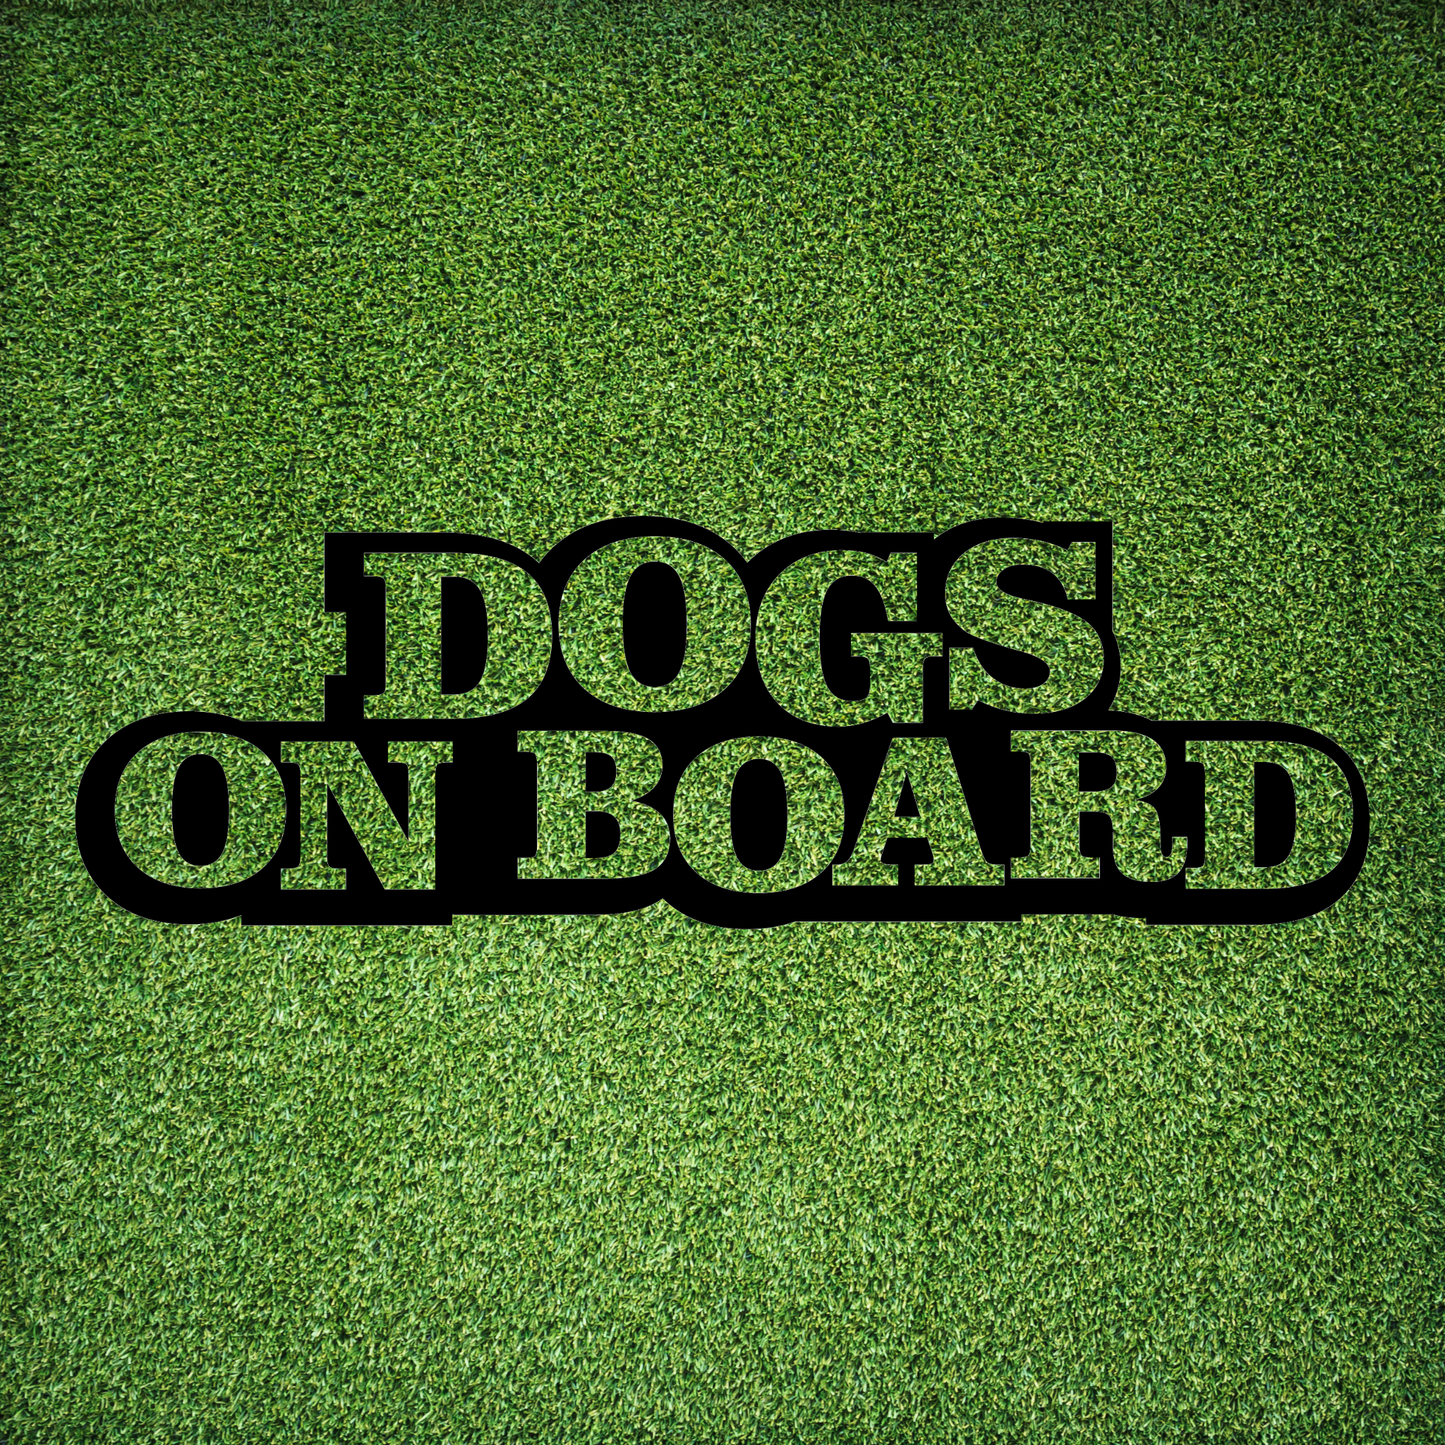 Dogs On Board